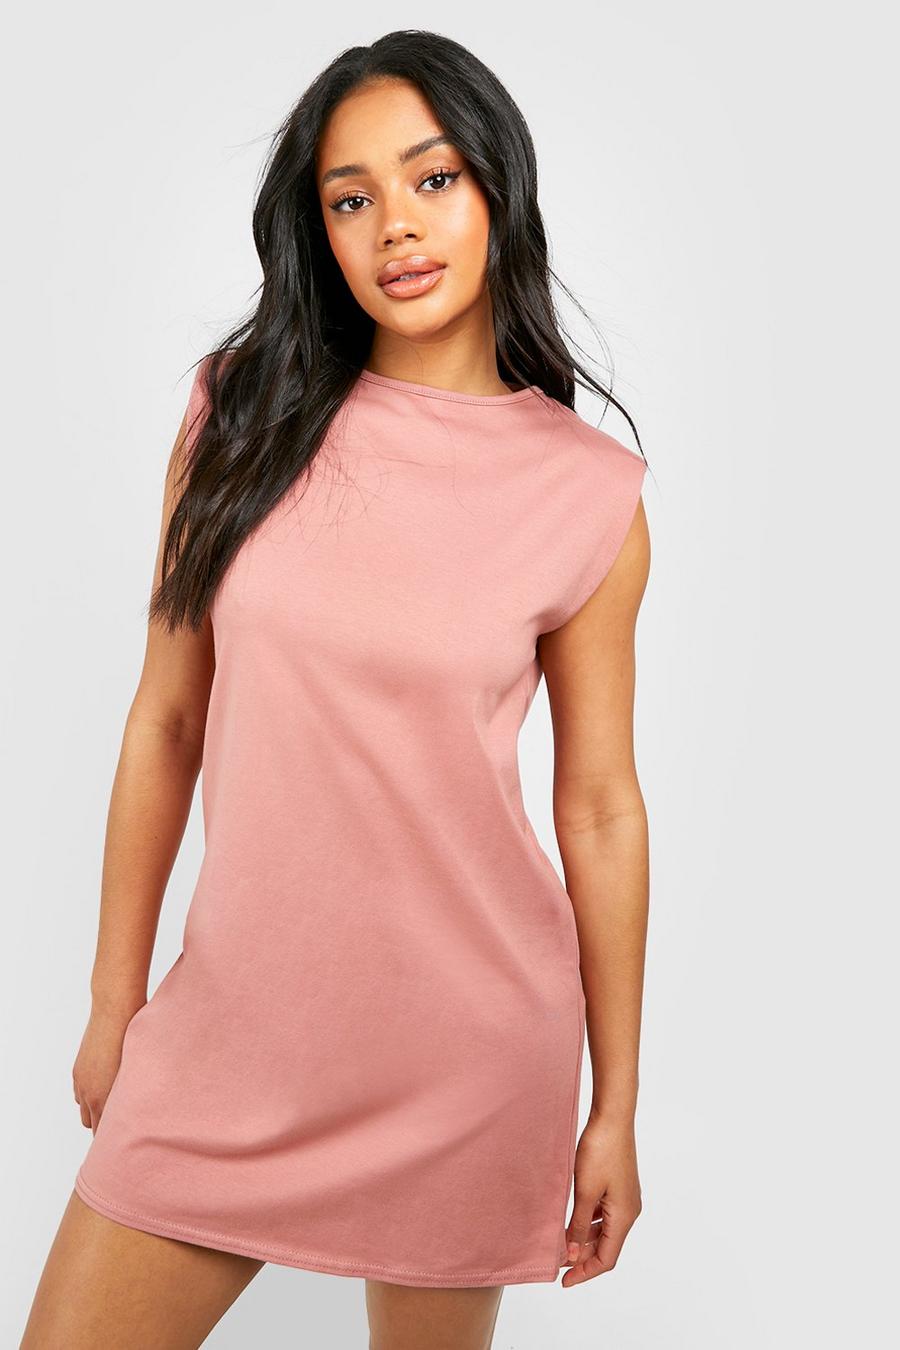 Dusty rose pink Cotton Shoulder Pad T-shirt Dress